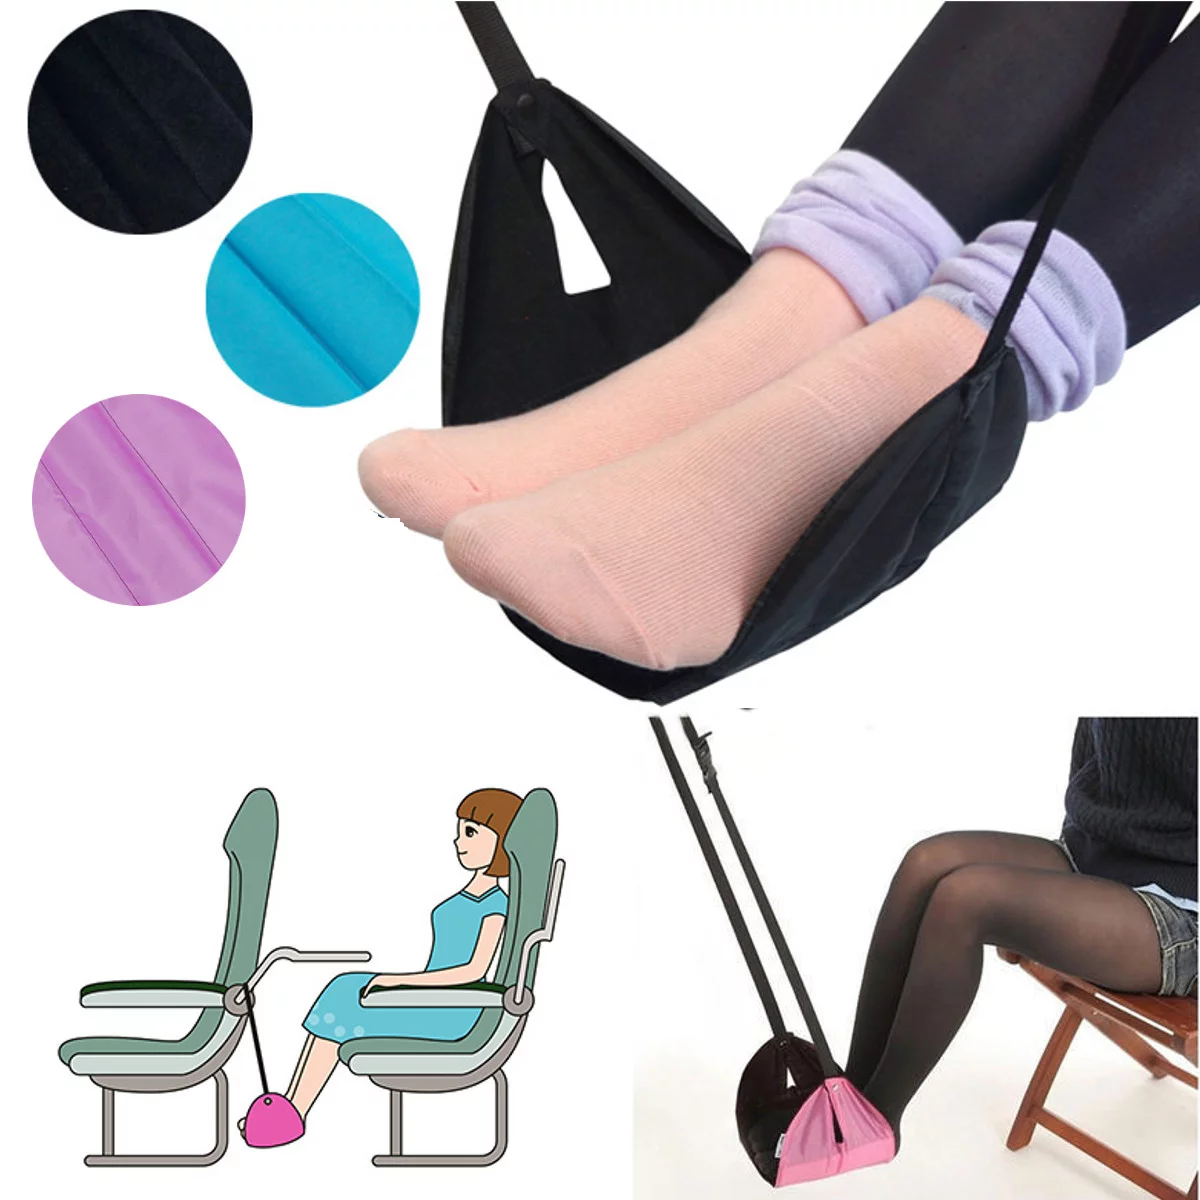 Supportive Black Leg Rest & Foot Rest - Hammock Style